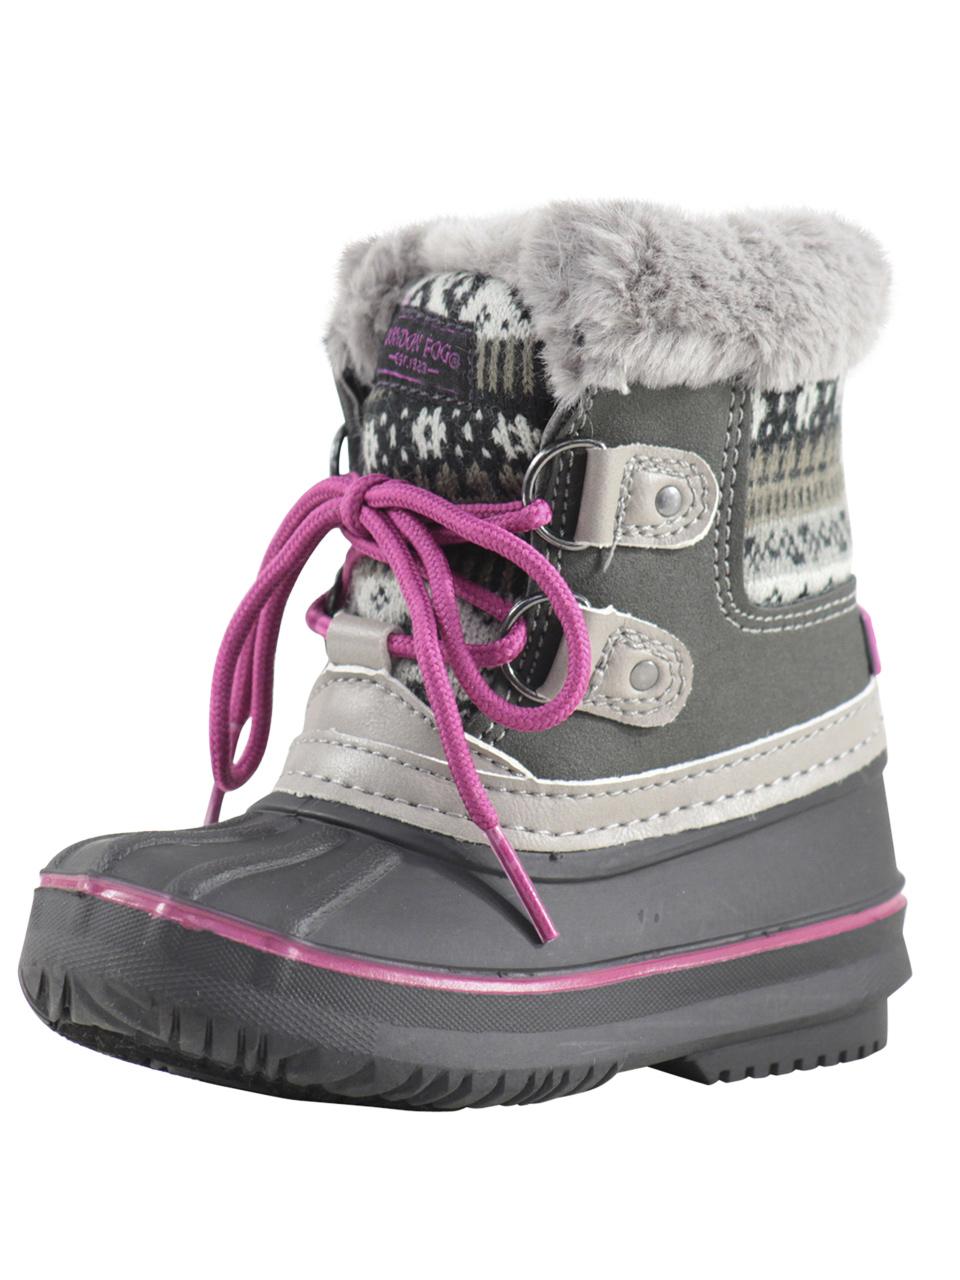 London Fog Toddler Girl's Lil Tottenham Grey Water Resistant Boots ...